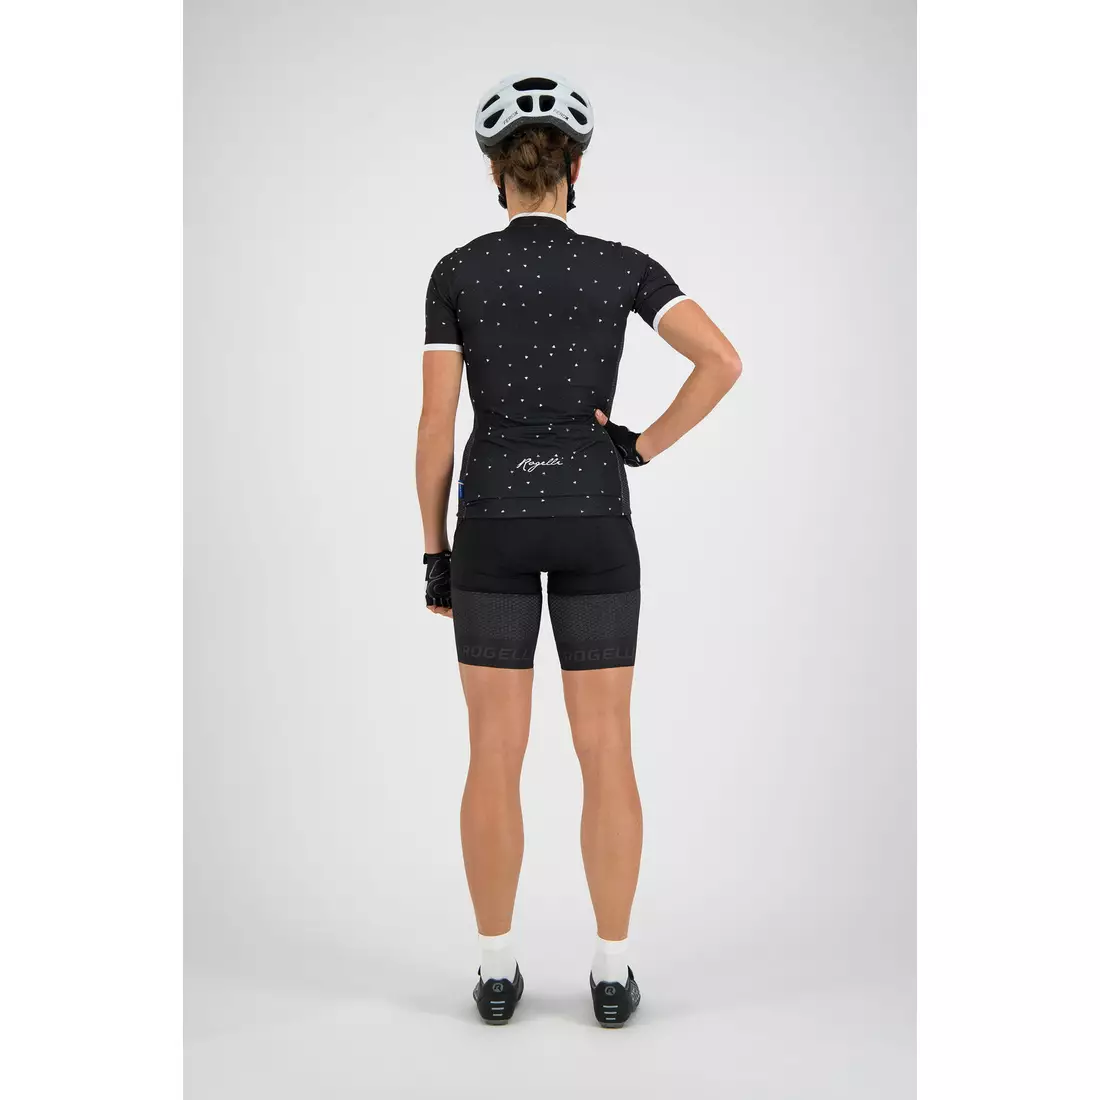 Rogelli DELTA 010.183 dámský cyklistický dres Black / White